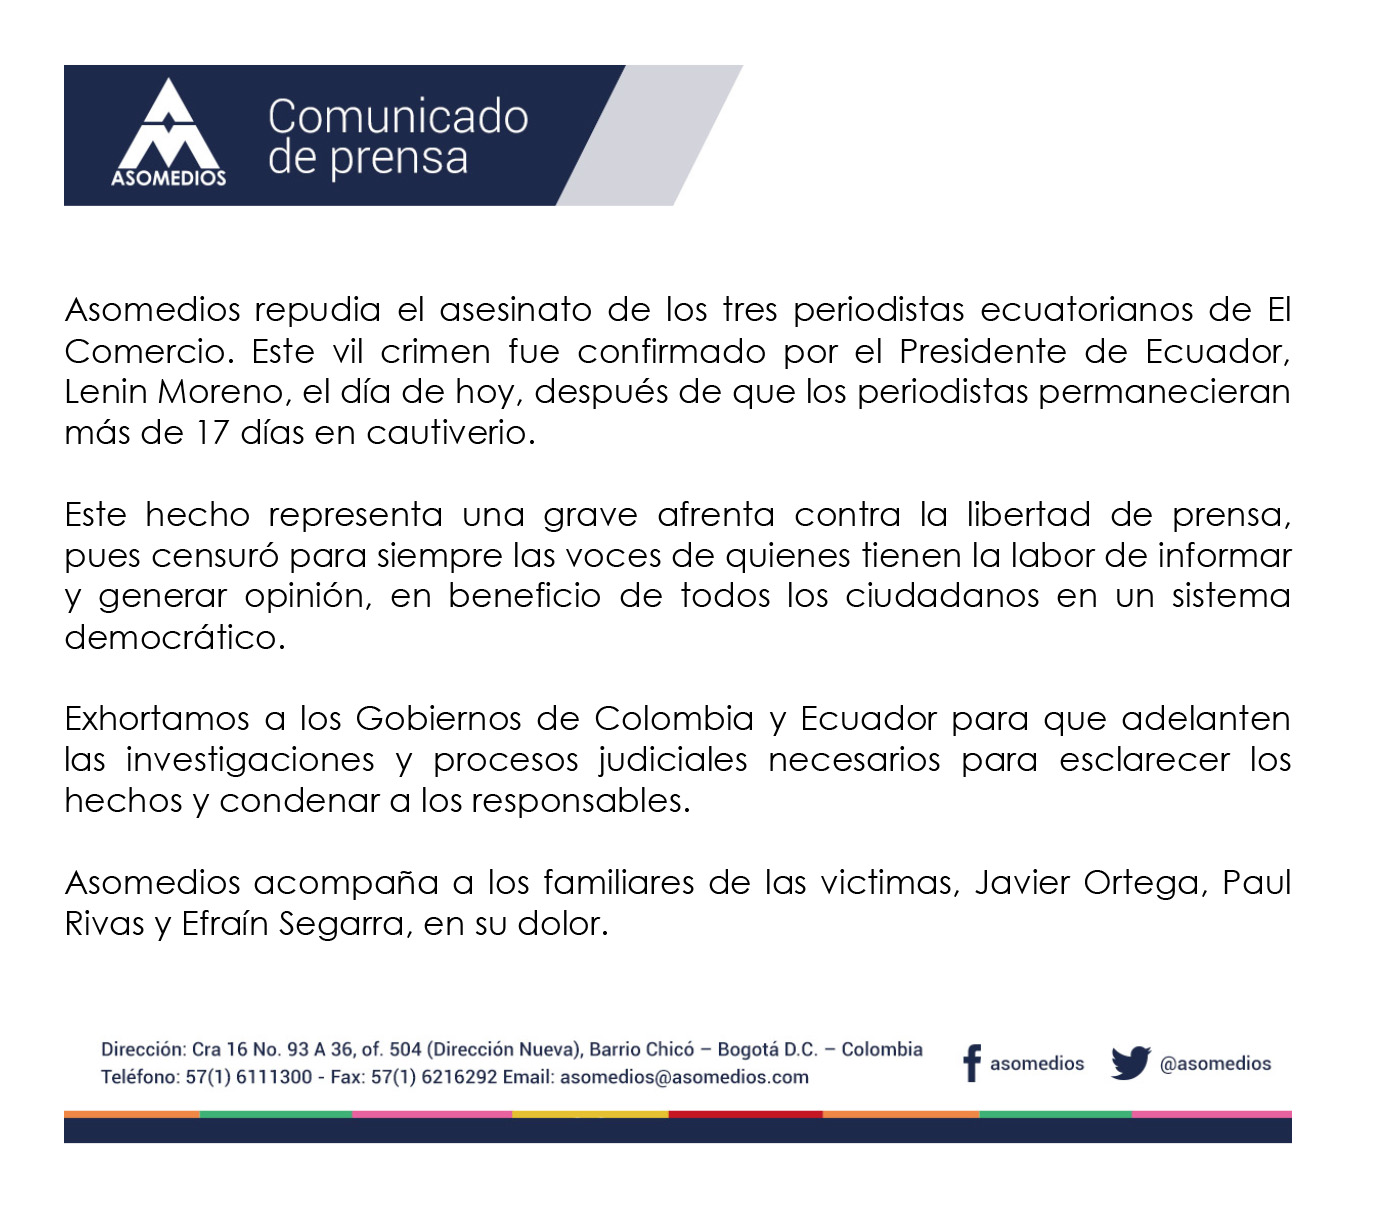 COMUNICADO DE PRENSA RESPECTO AL ASESINATO DE LOS 3 PERIODISTAS DE ECUADOR